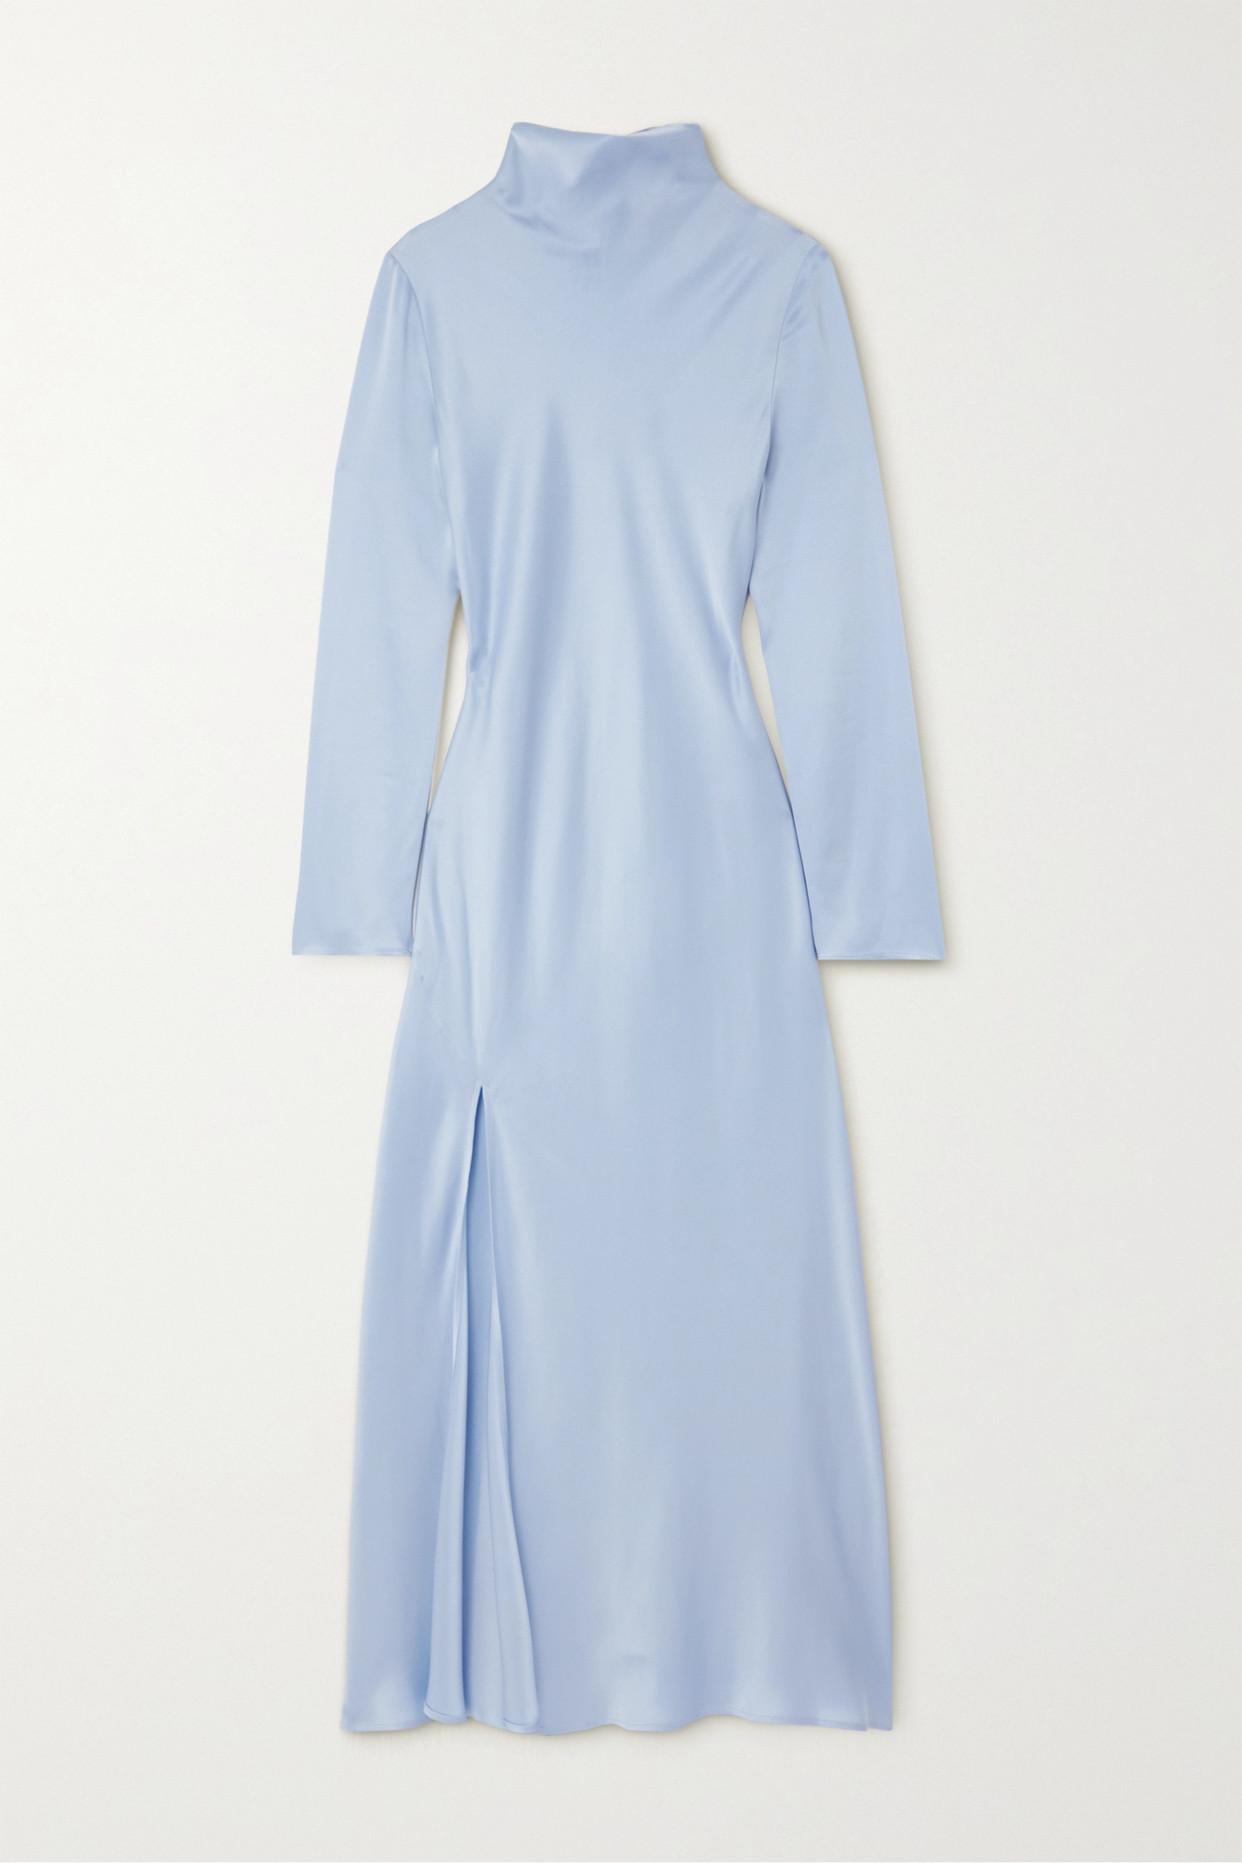 LAPOINTE Satin Midi Dress in Blue | Lyst